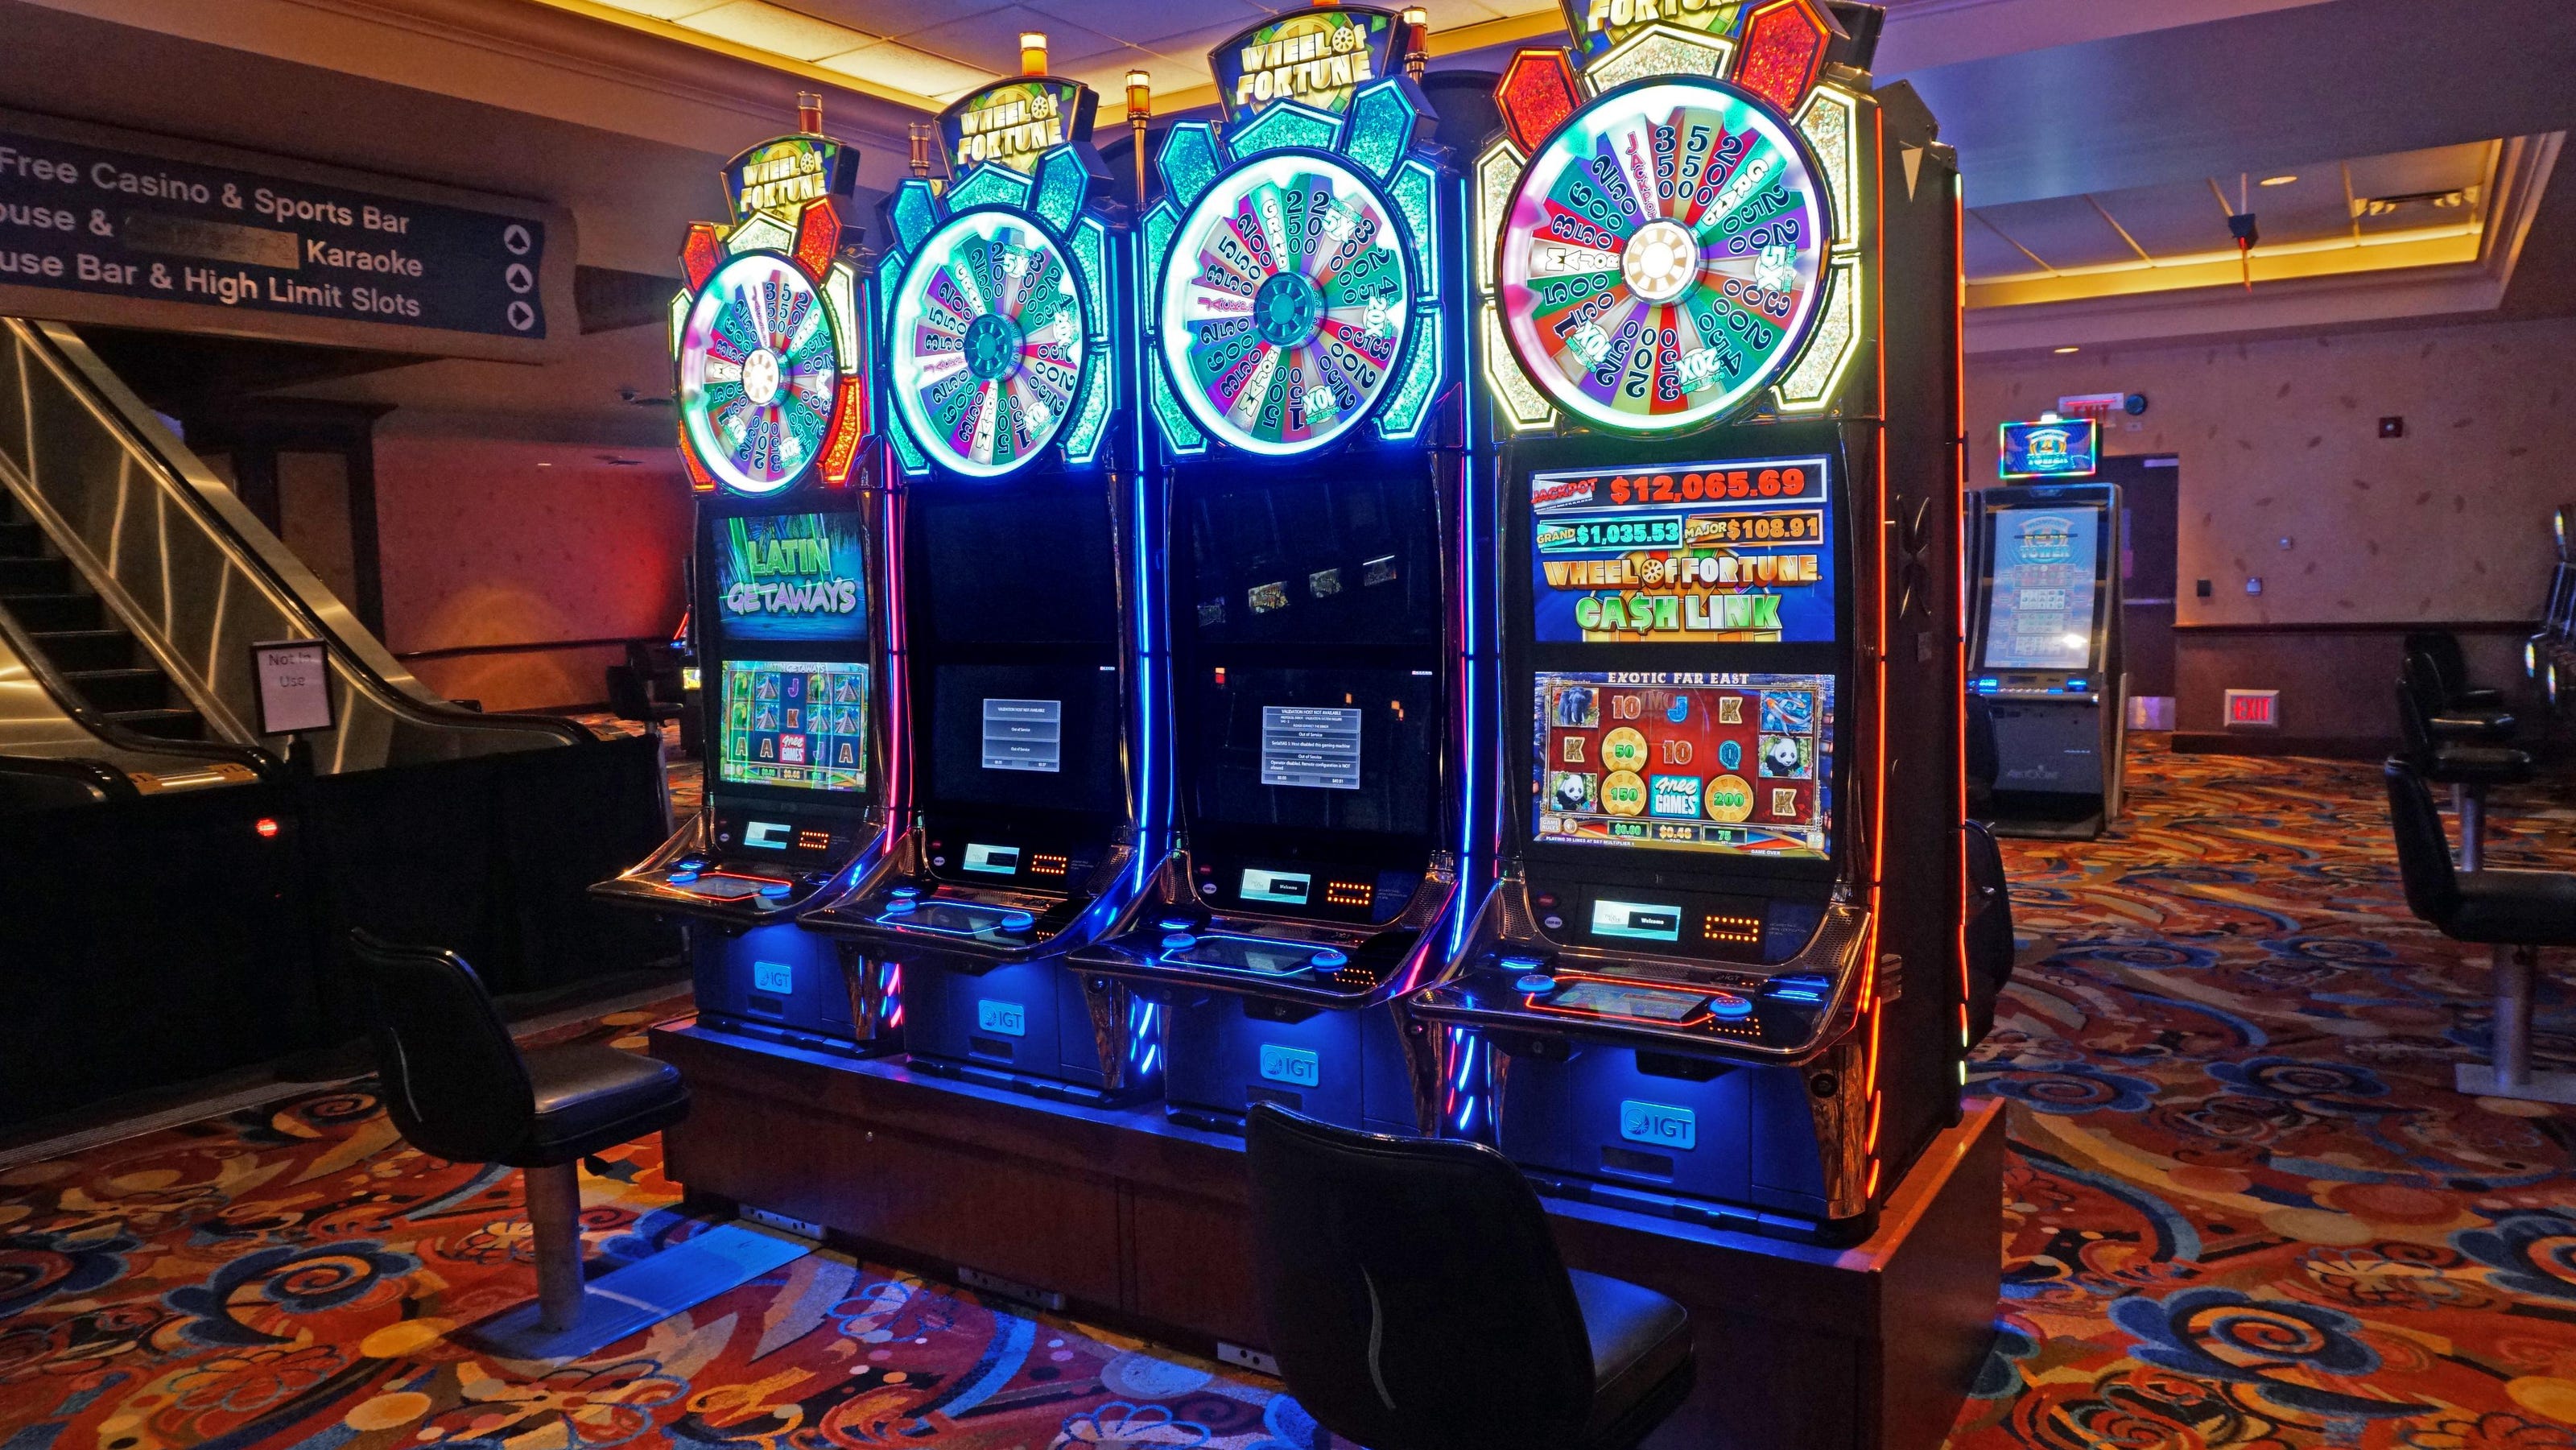 Win river casino redding reopening